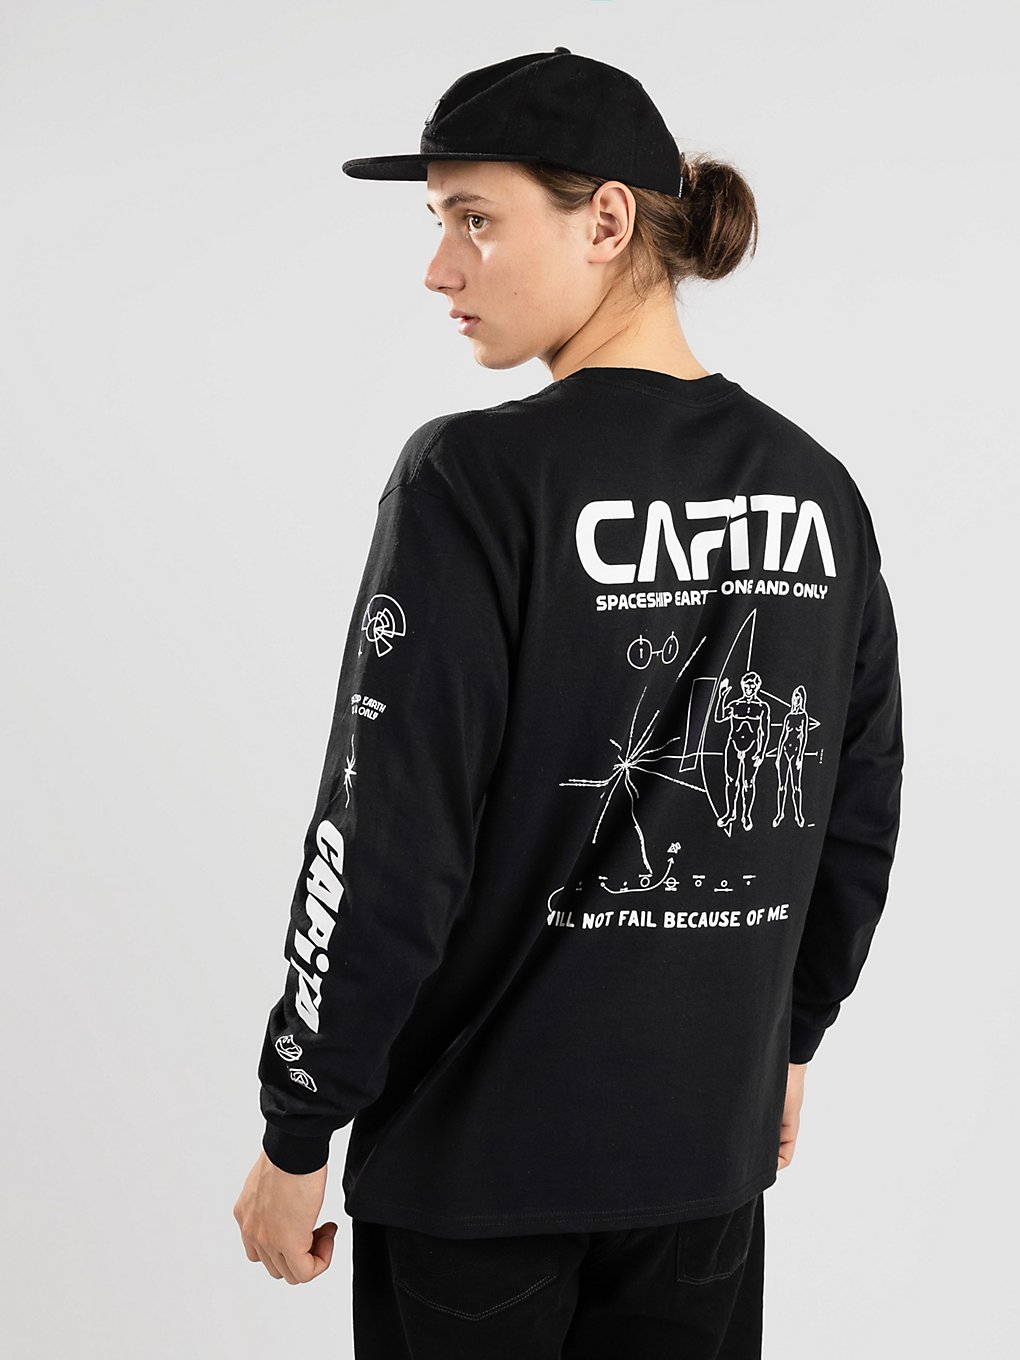 CAPiTA Spaceship 2 Long Sleeve T-Shirt black kaufen